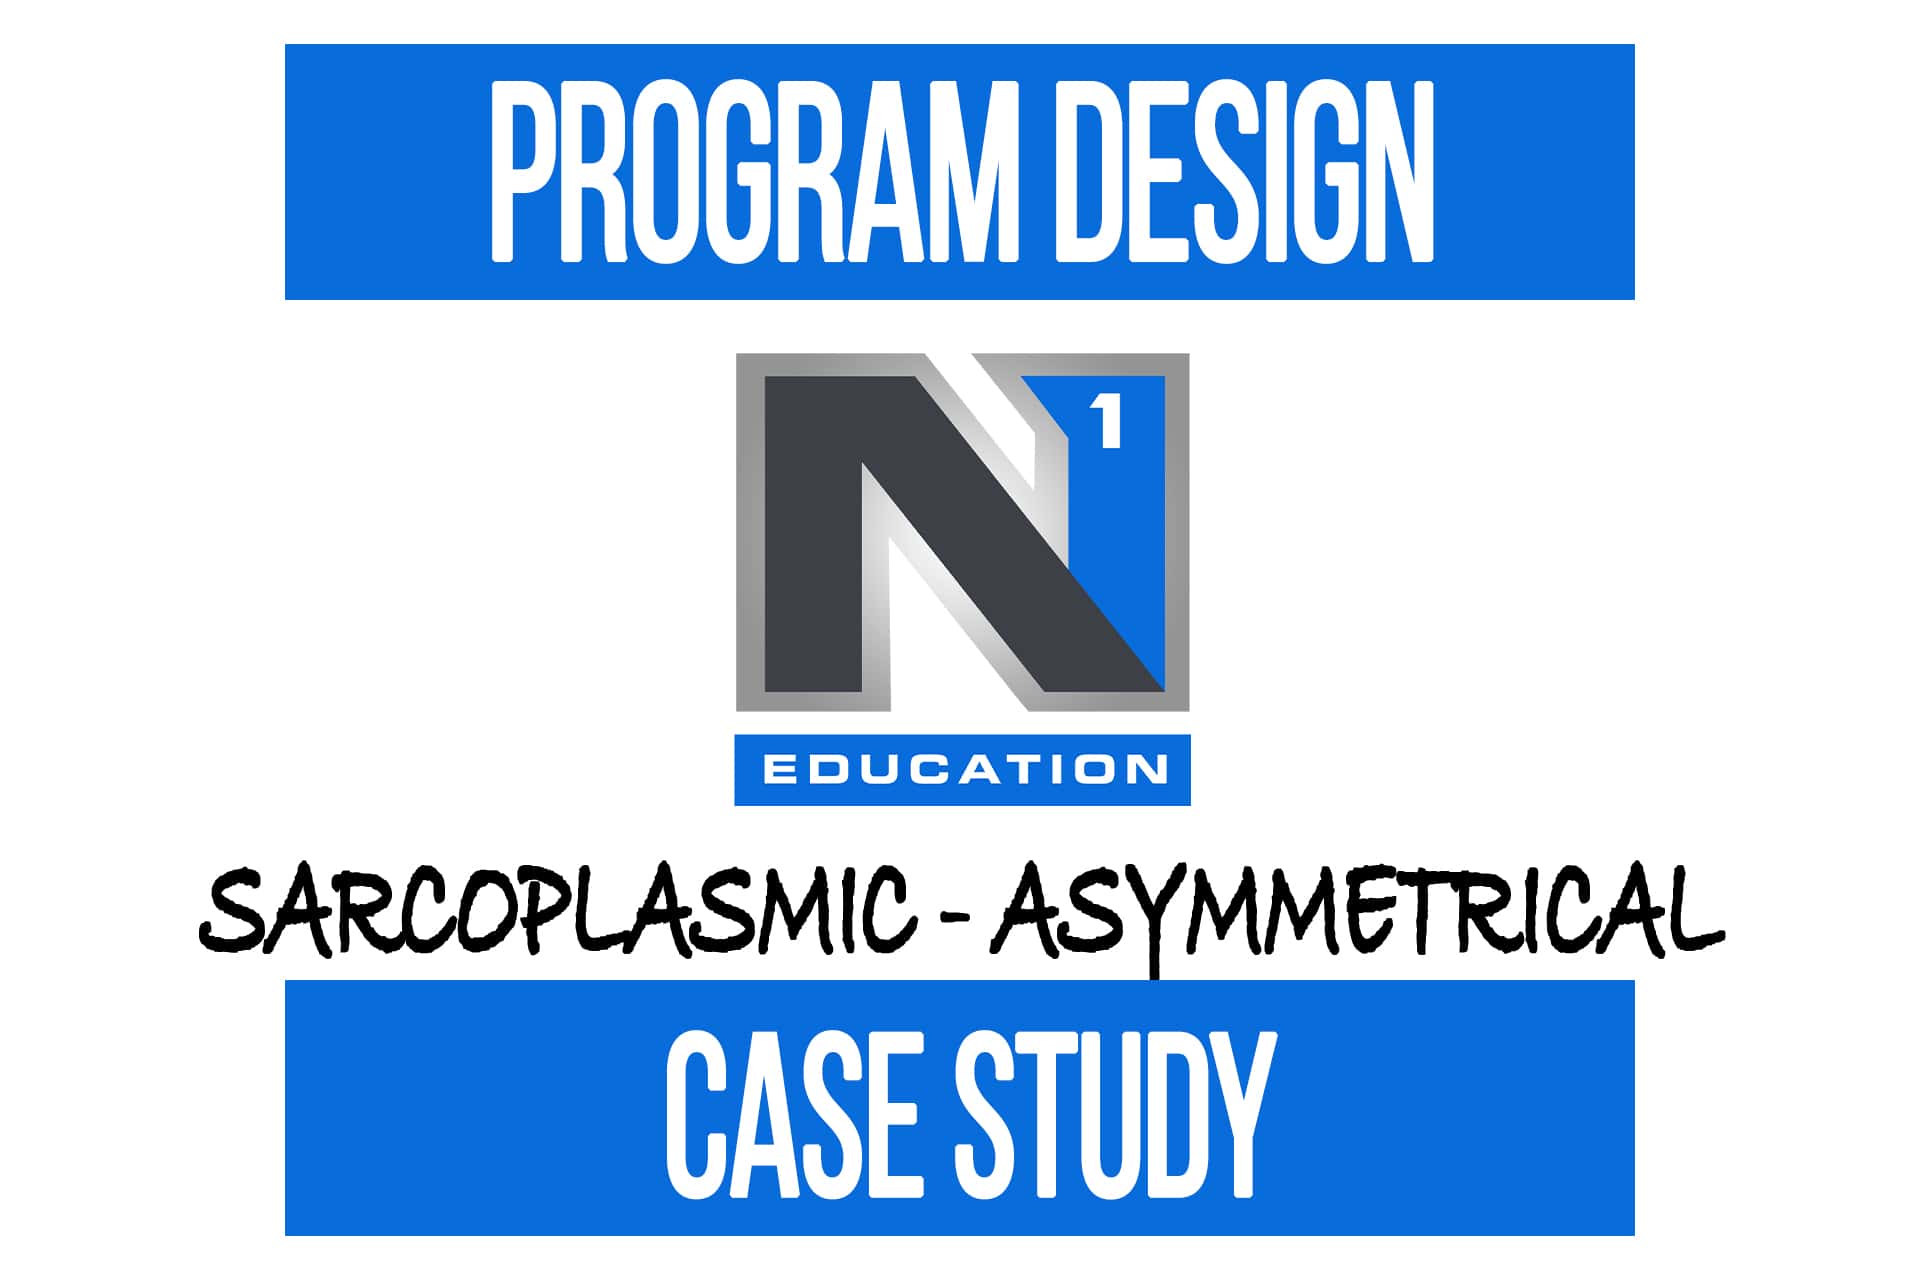 Program Design Case Study: Sarcoplasmic Asymmetrical (Advanced)